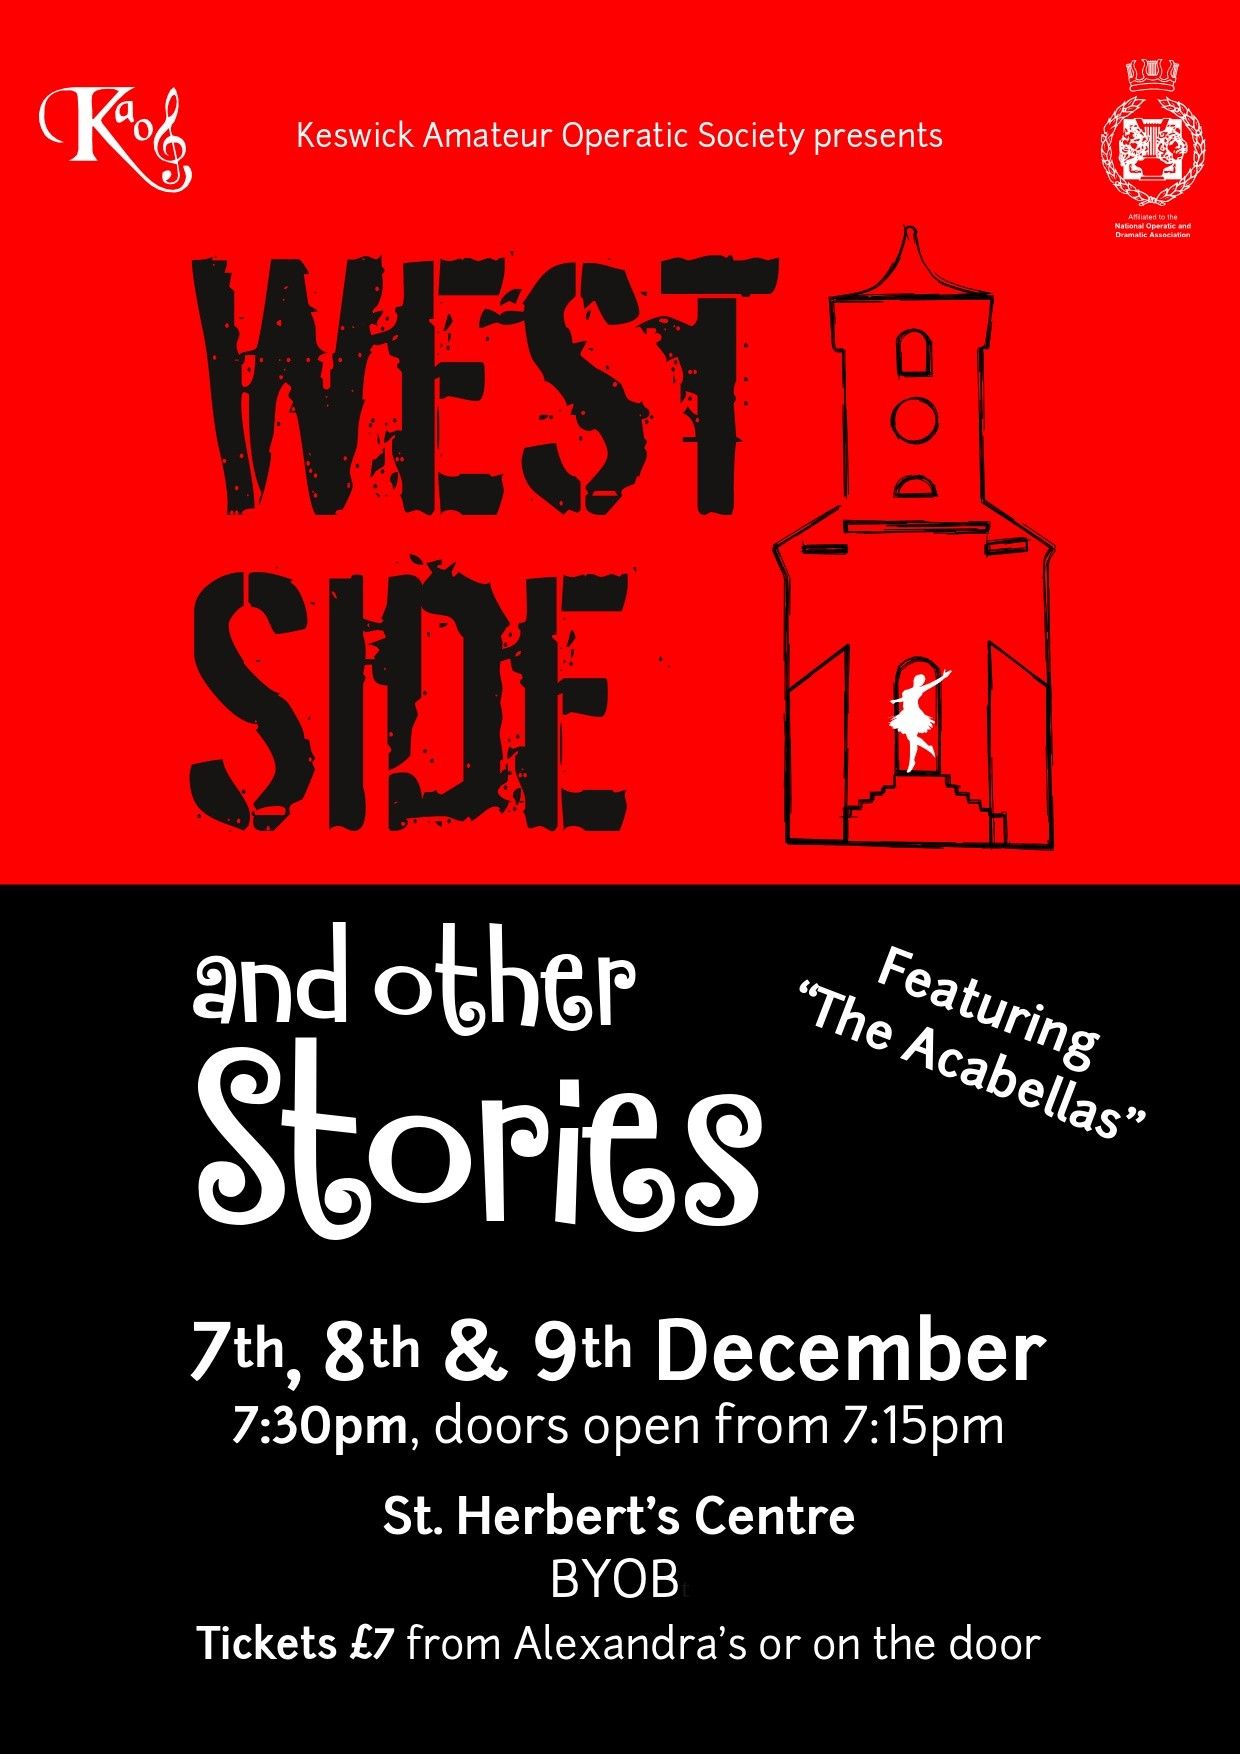 Keswick Amateur Operatic Society presents West Side